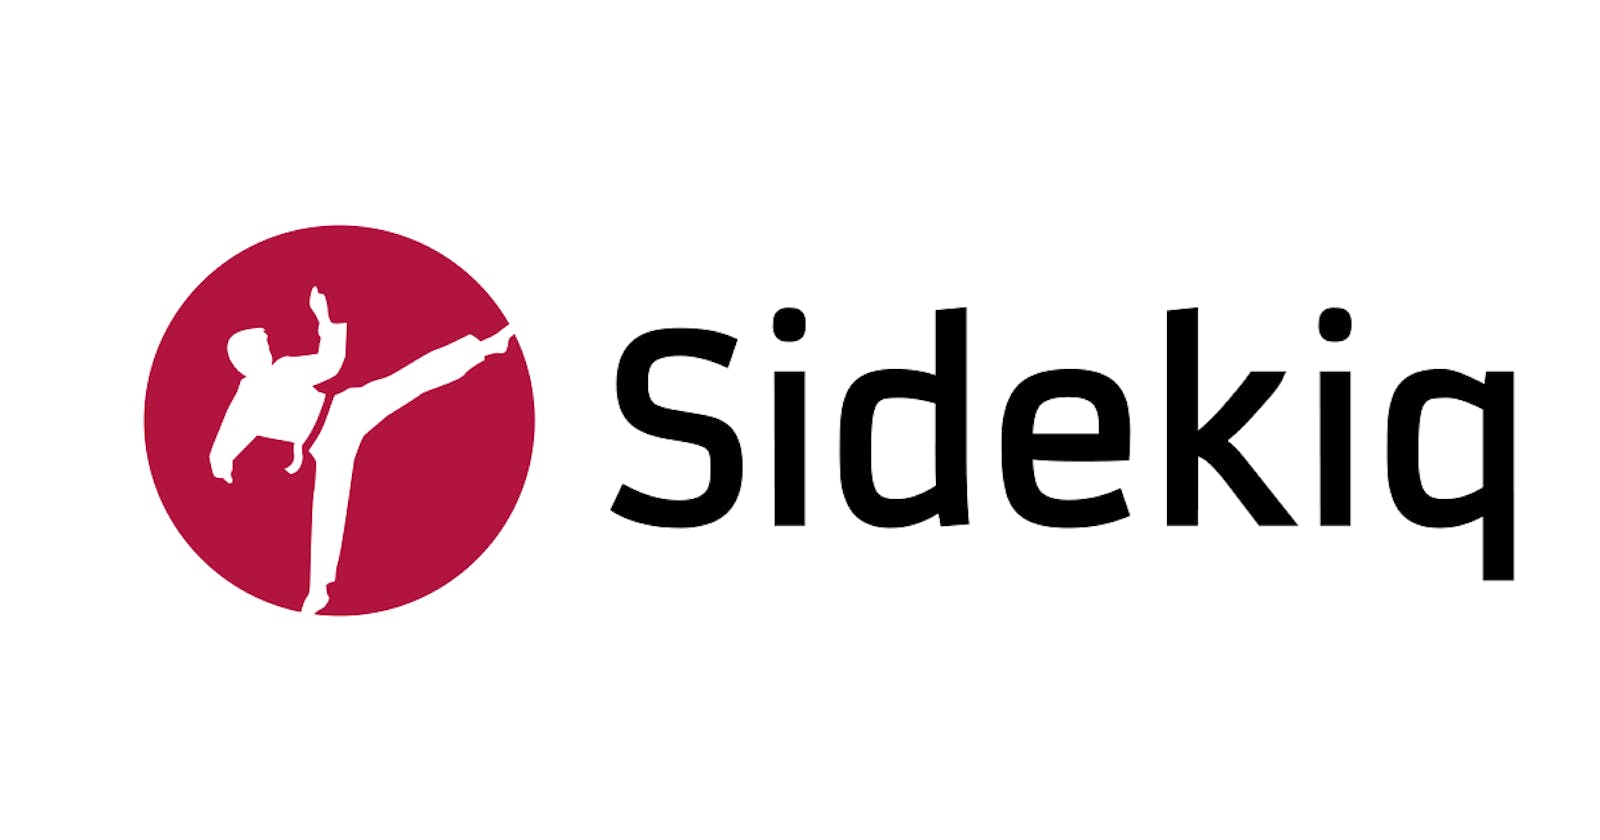 Sidekiq is too fast